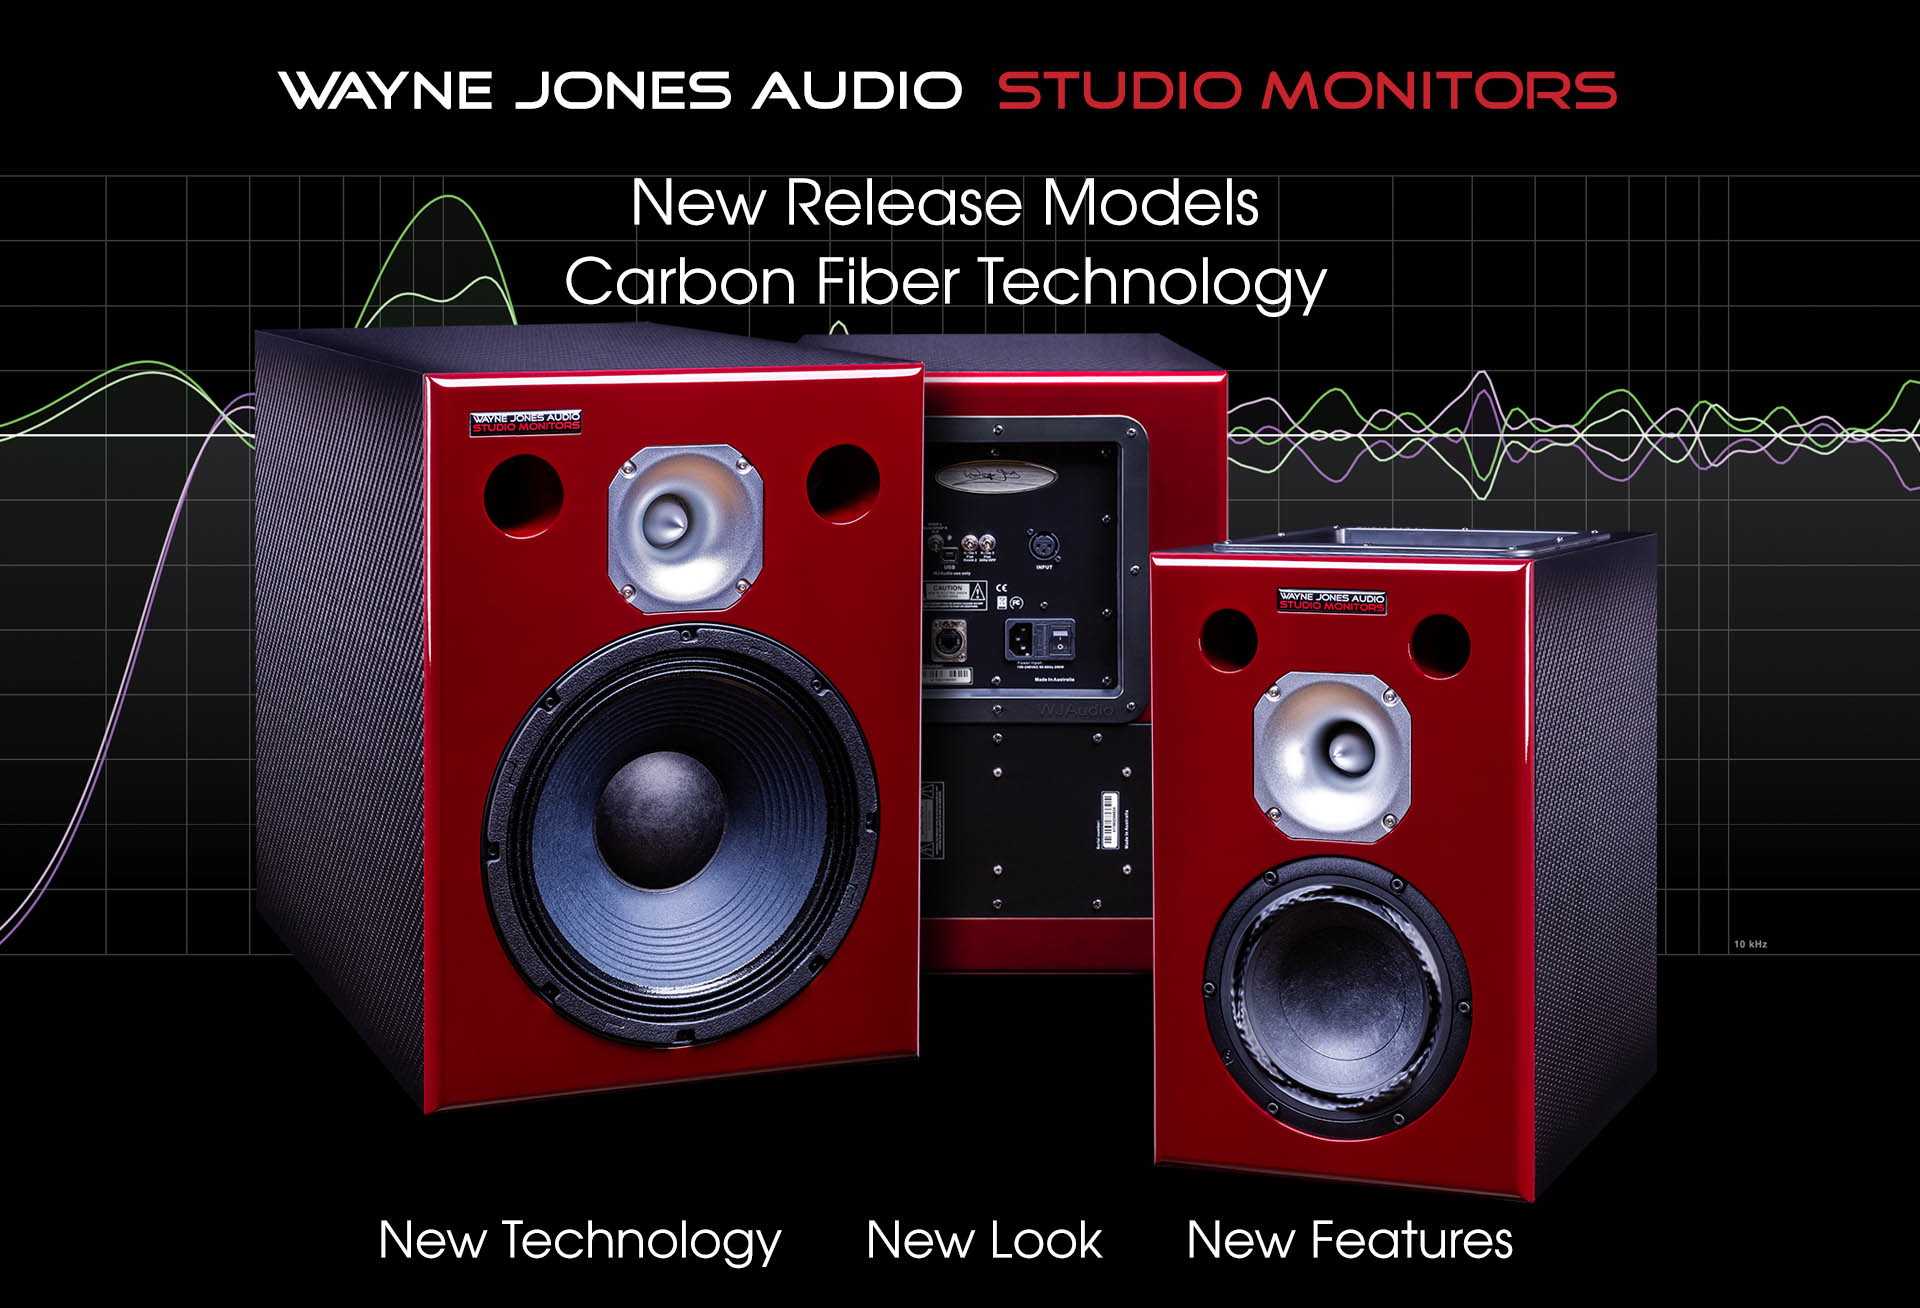 Wayne Jones Audio Powered Carbon Fiber Recording Studio Monitors, recording engineering, audio and film post production, sound track mastering, audio mixing, sound mixing, recording studio gear.